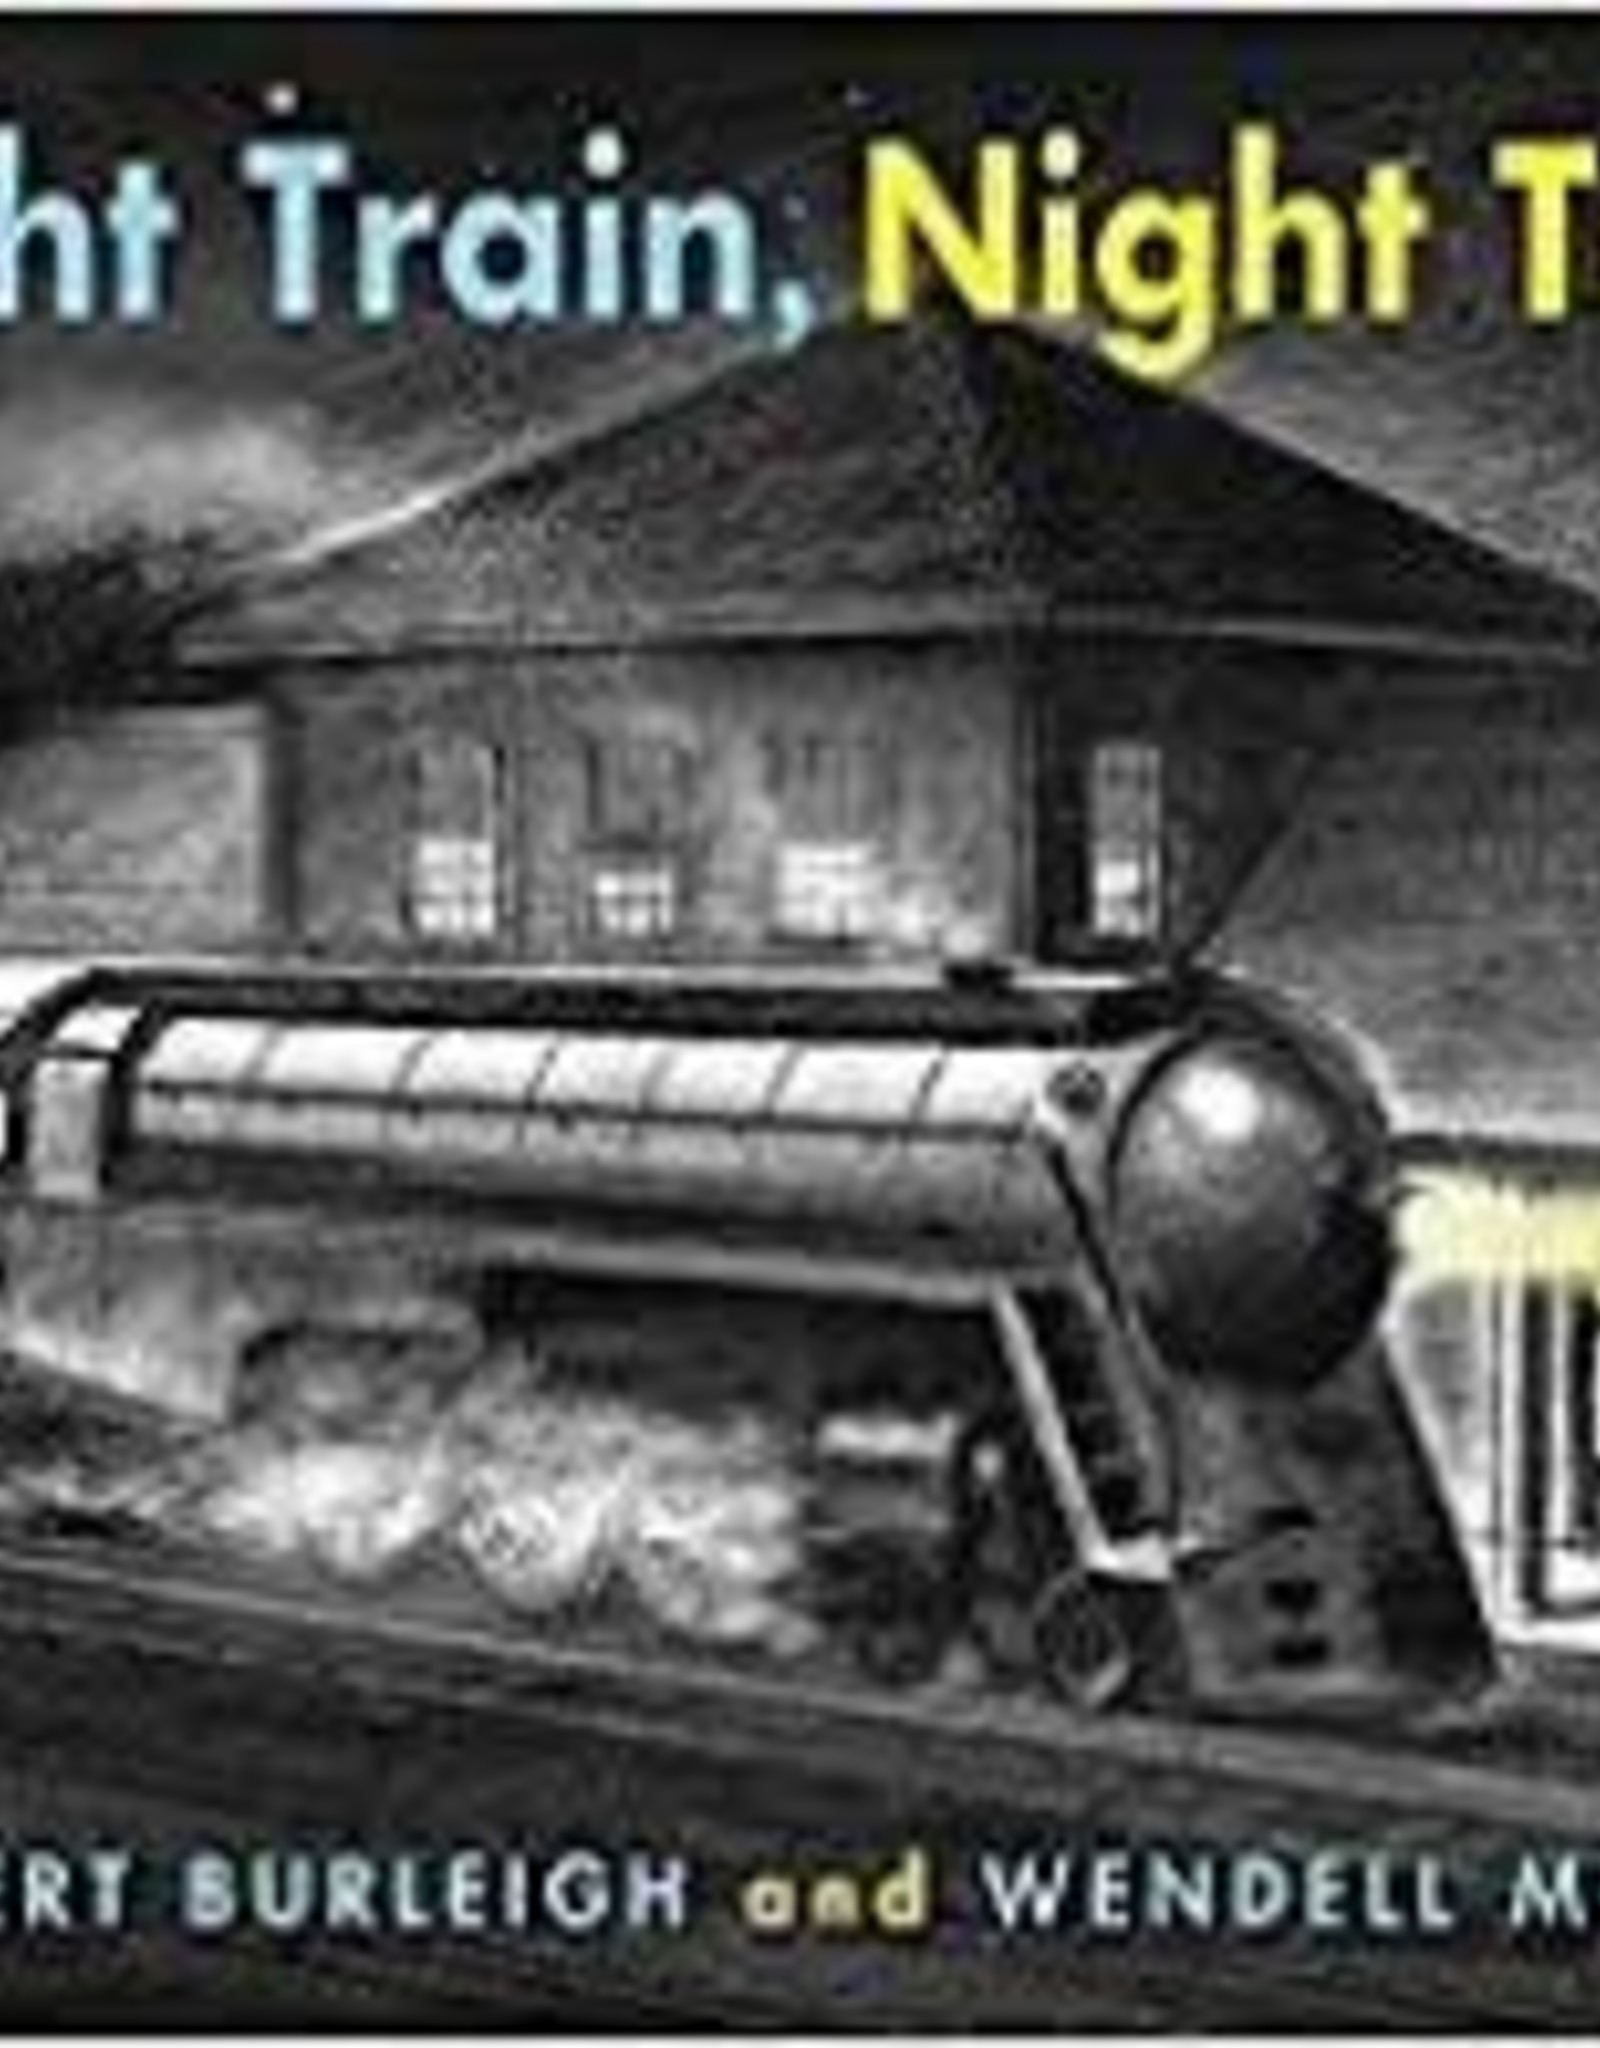 Random House/Penguin Night Train, Night Train